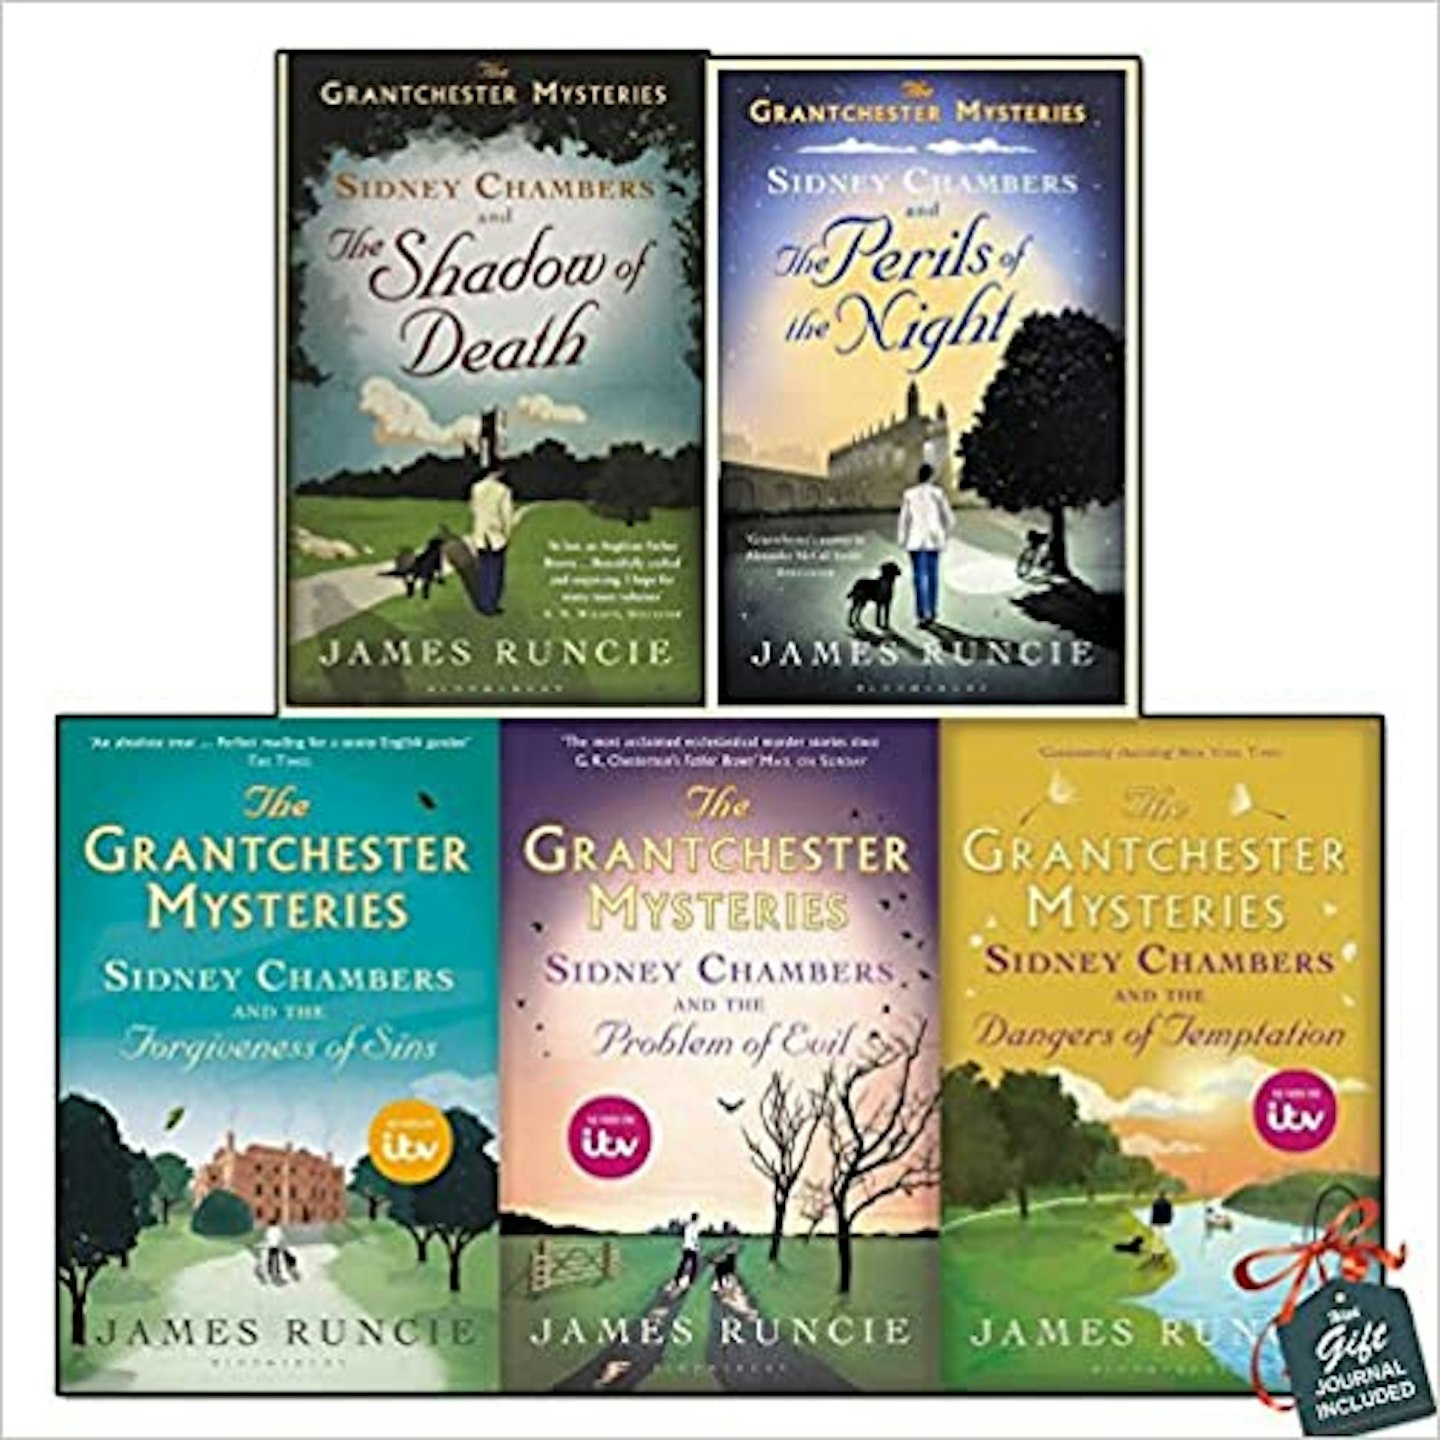 Grantchester Mysteries book series